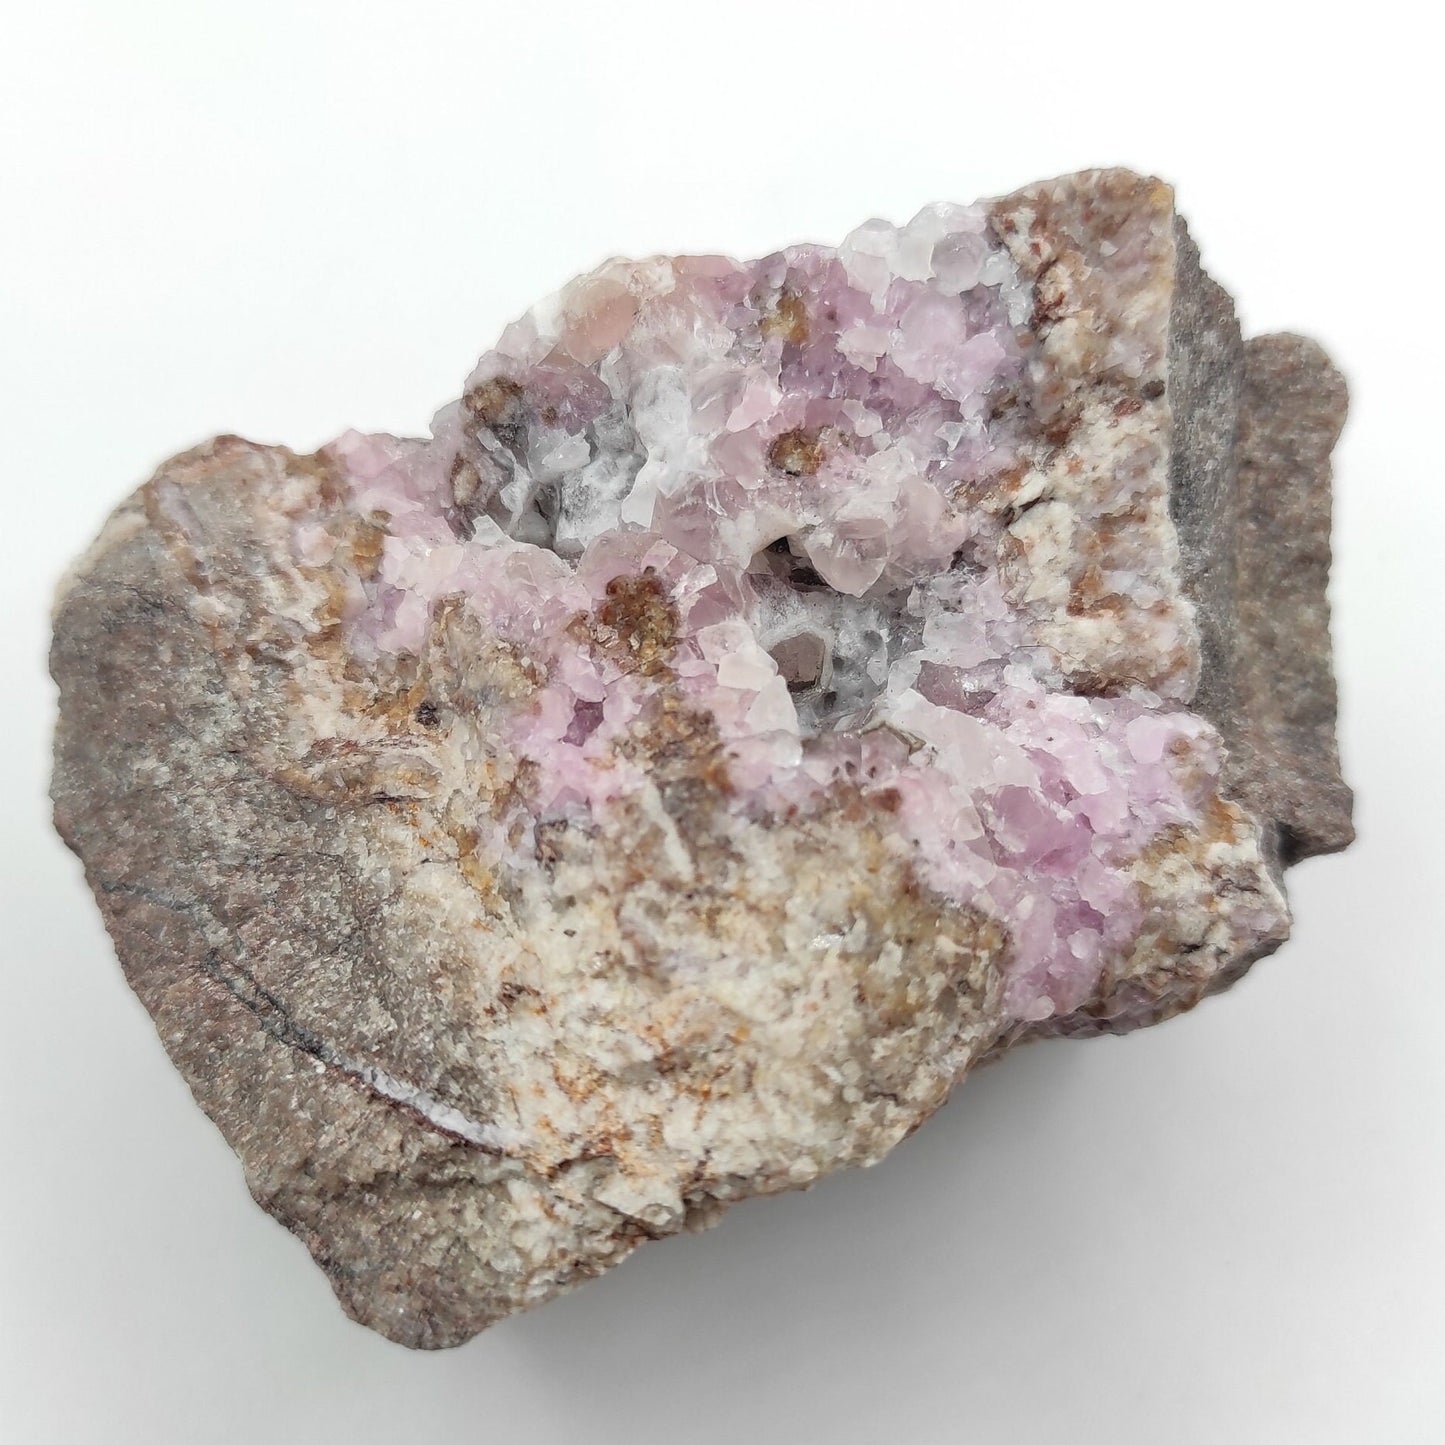 349g Cobalto Calcite in Matrix - Pink Cobalt Calcite from Bou Azzer, Morocco - Salrose Crystal - Cobaltocalcite Mineral Specimen